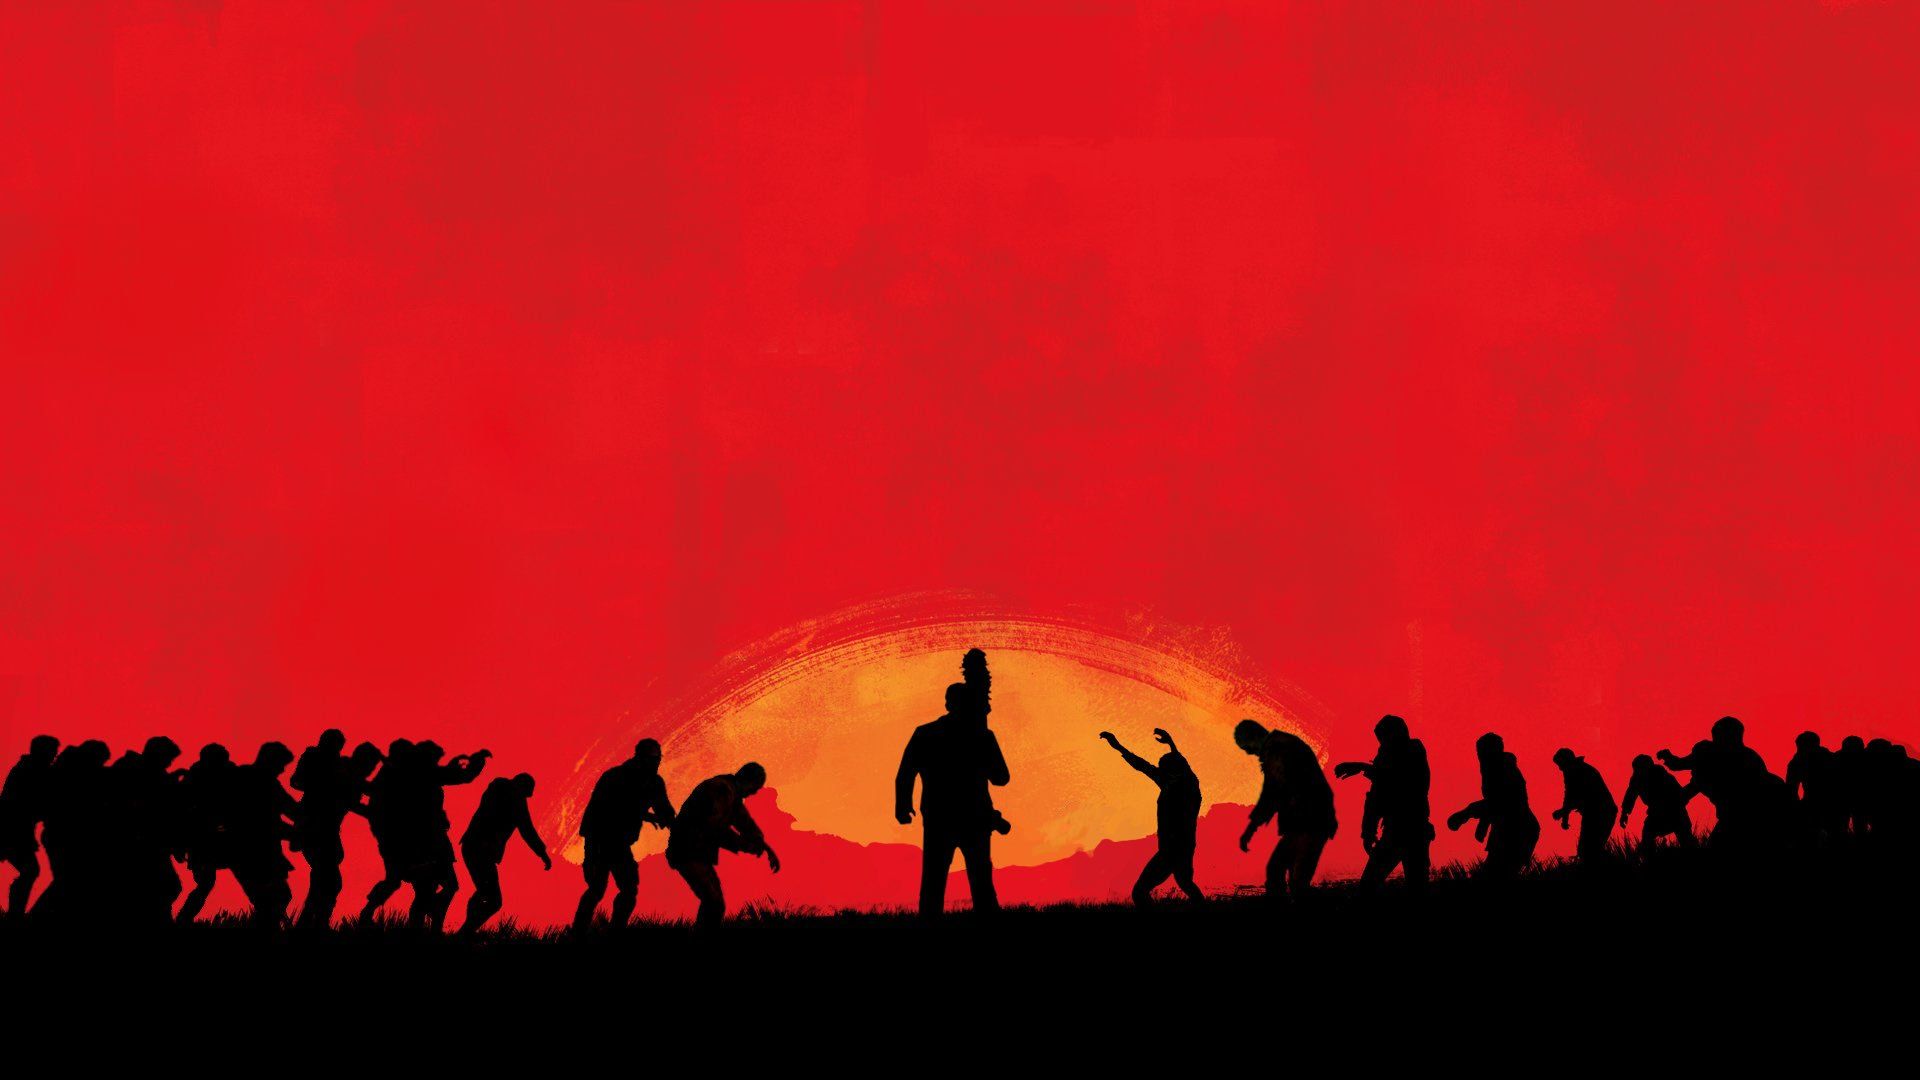 Red Dead Redemption 2 Wallpaper .com